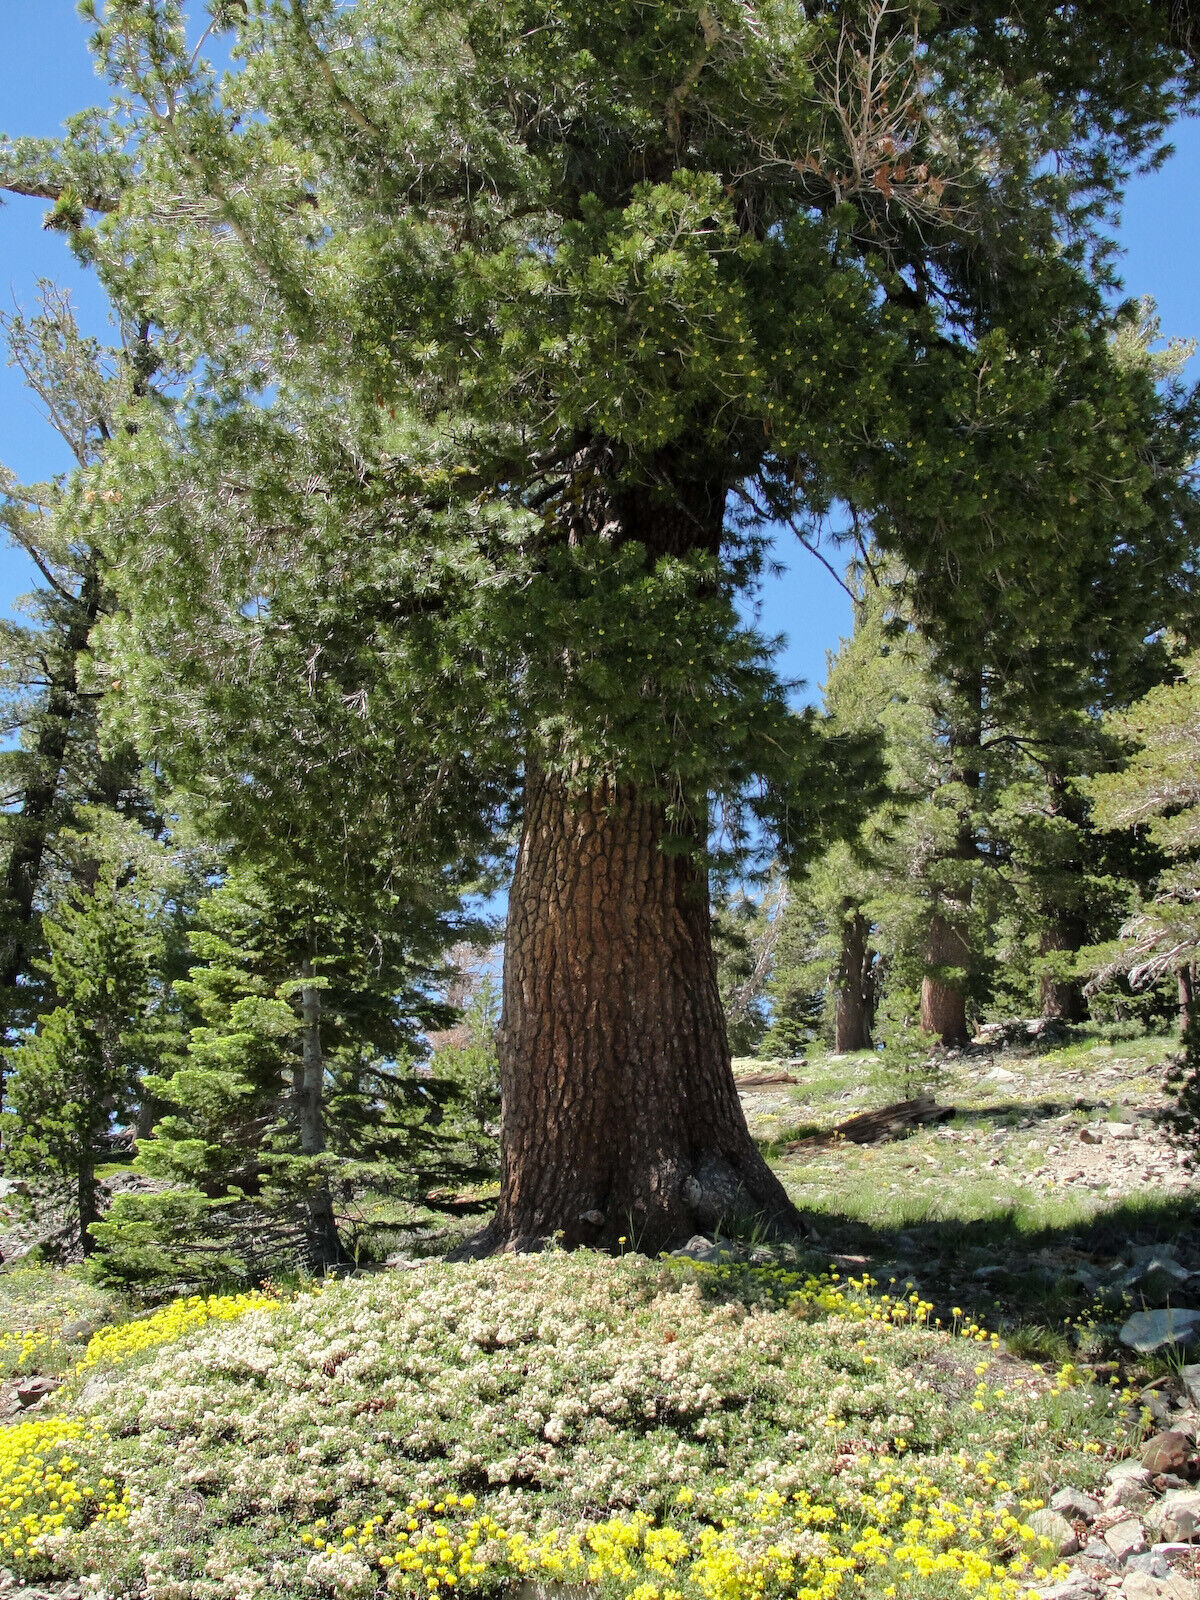 Western White Pine, Pinus monticola